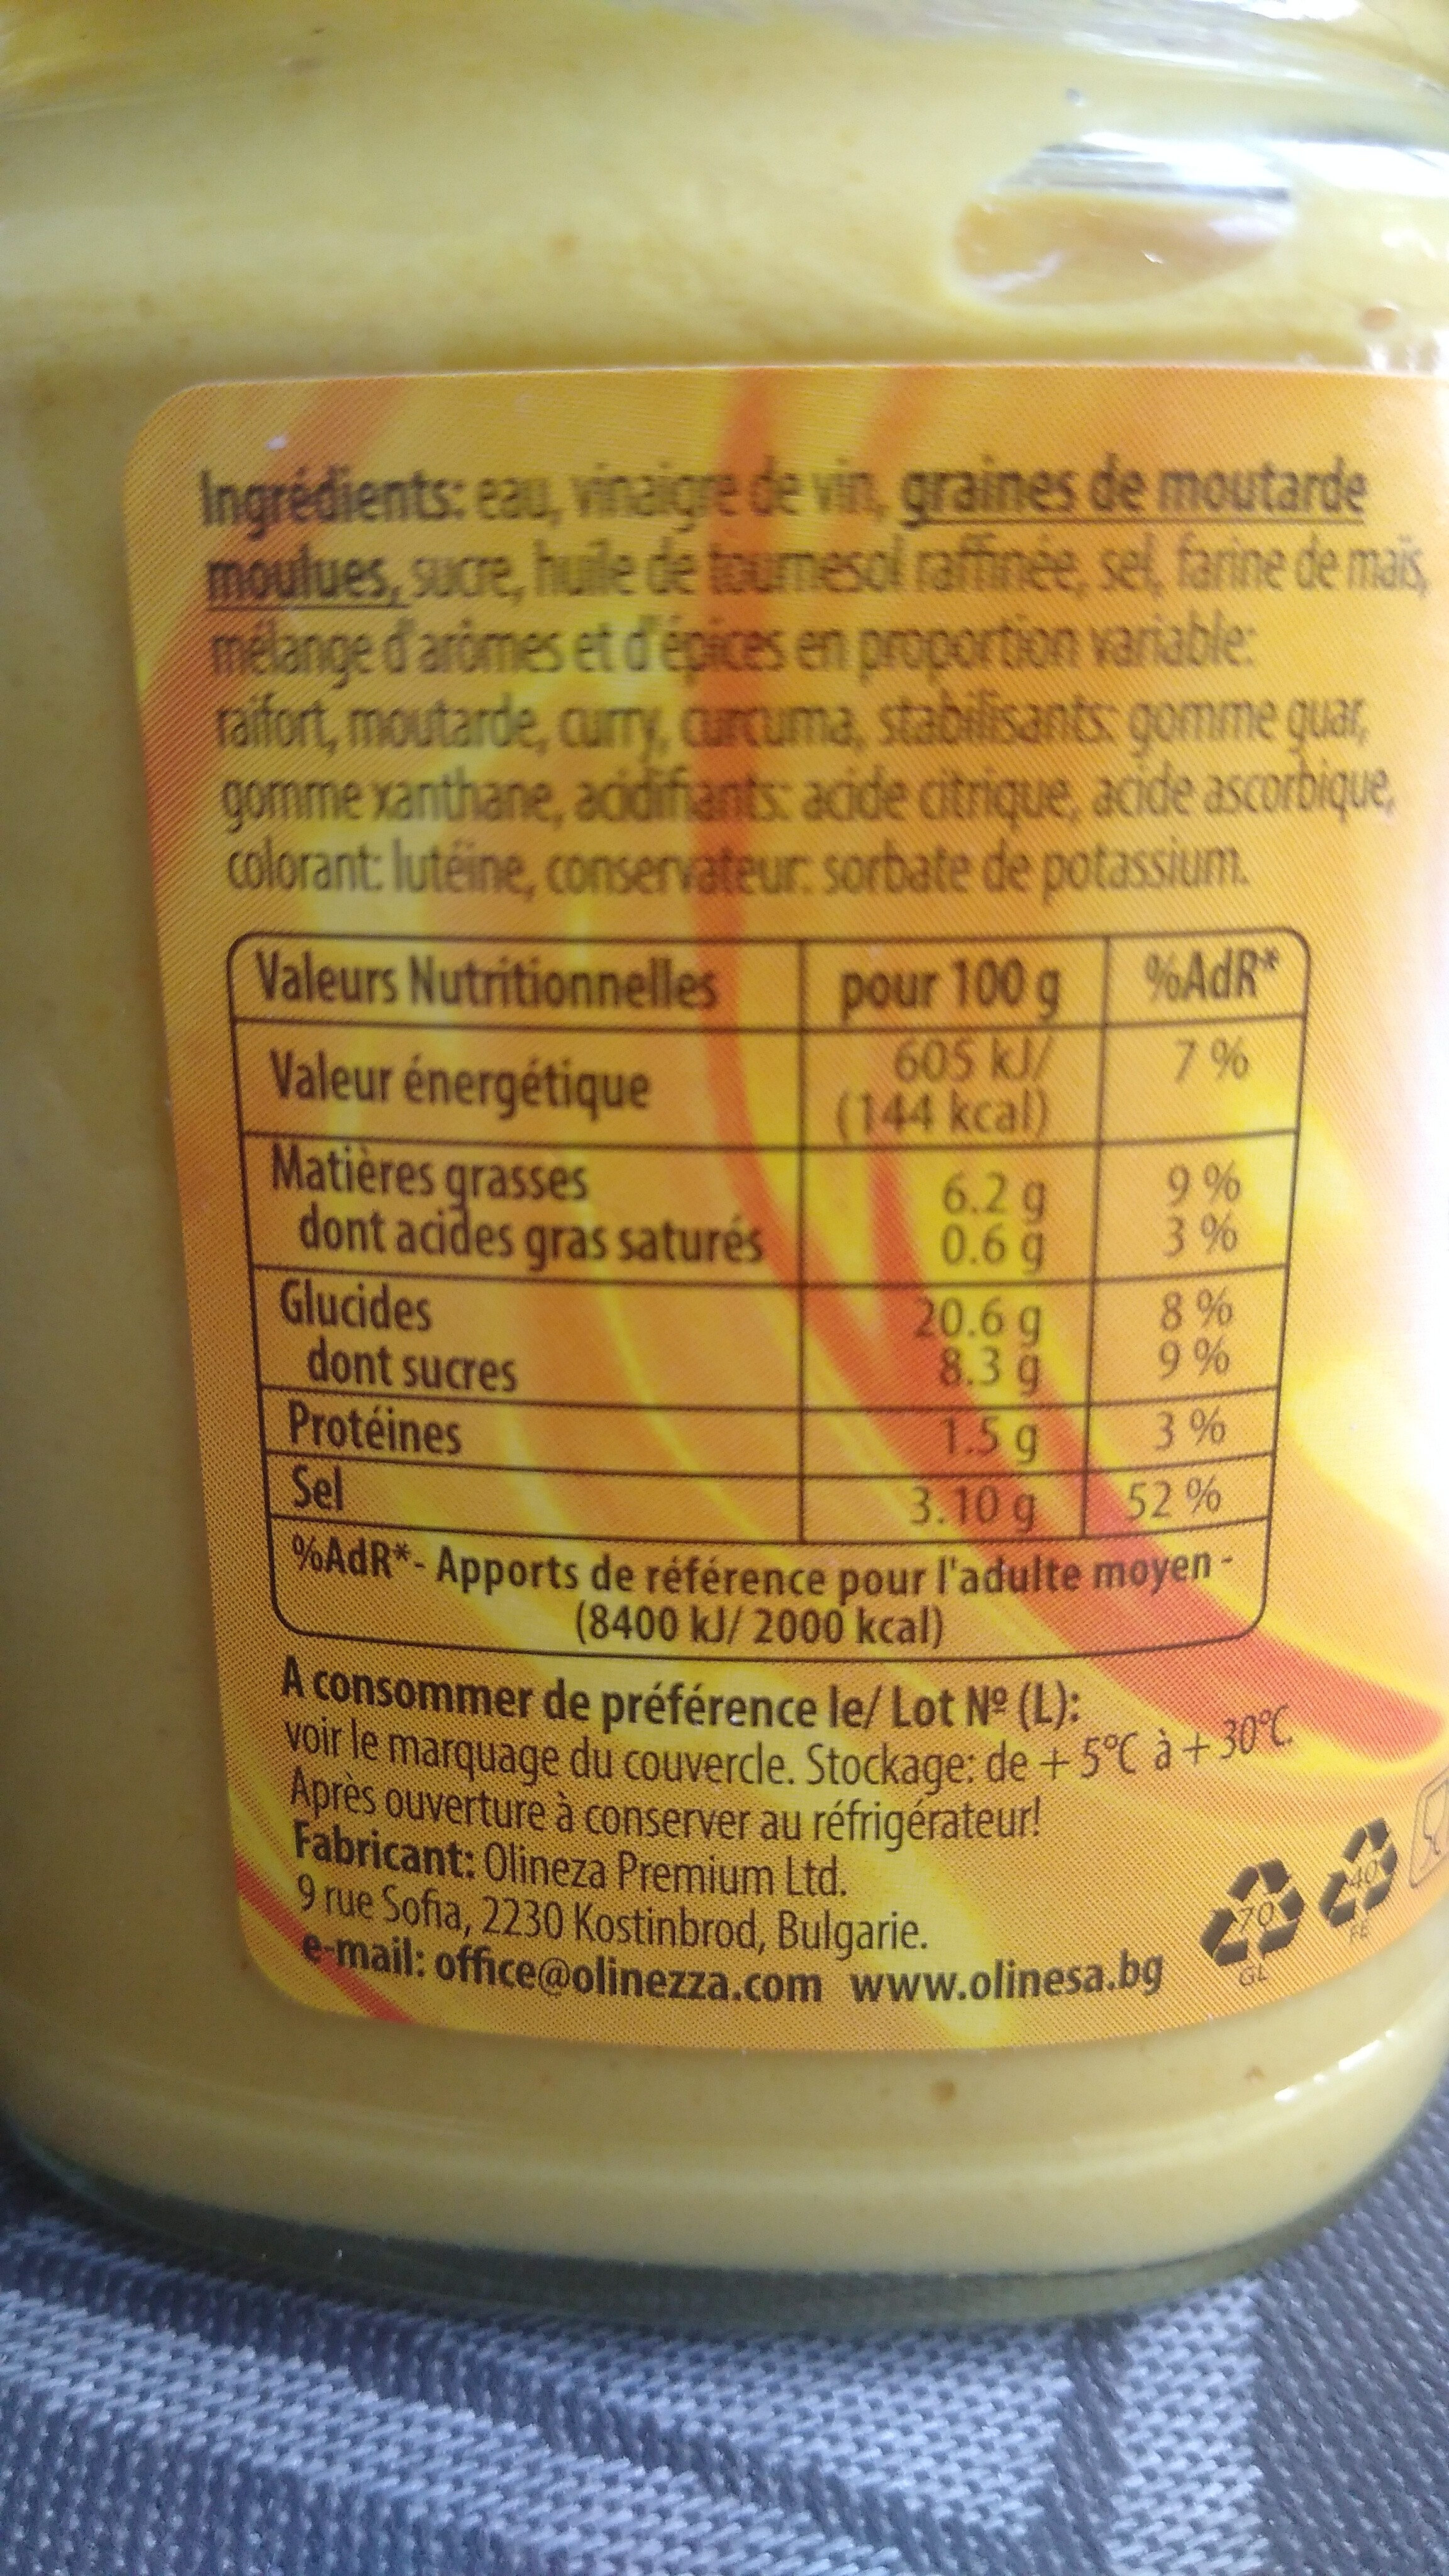 moutarde fine - Ingredients - fr